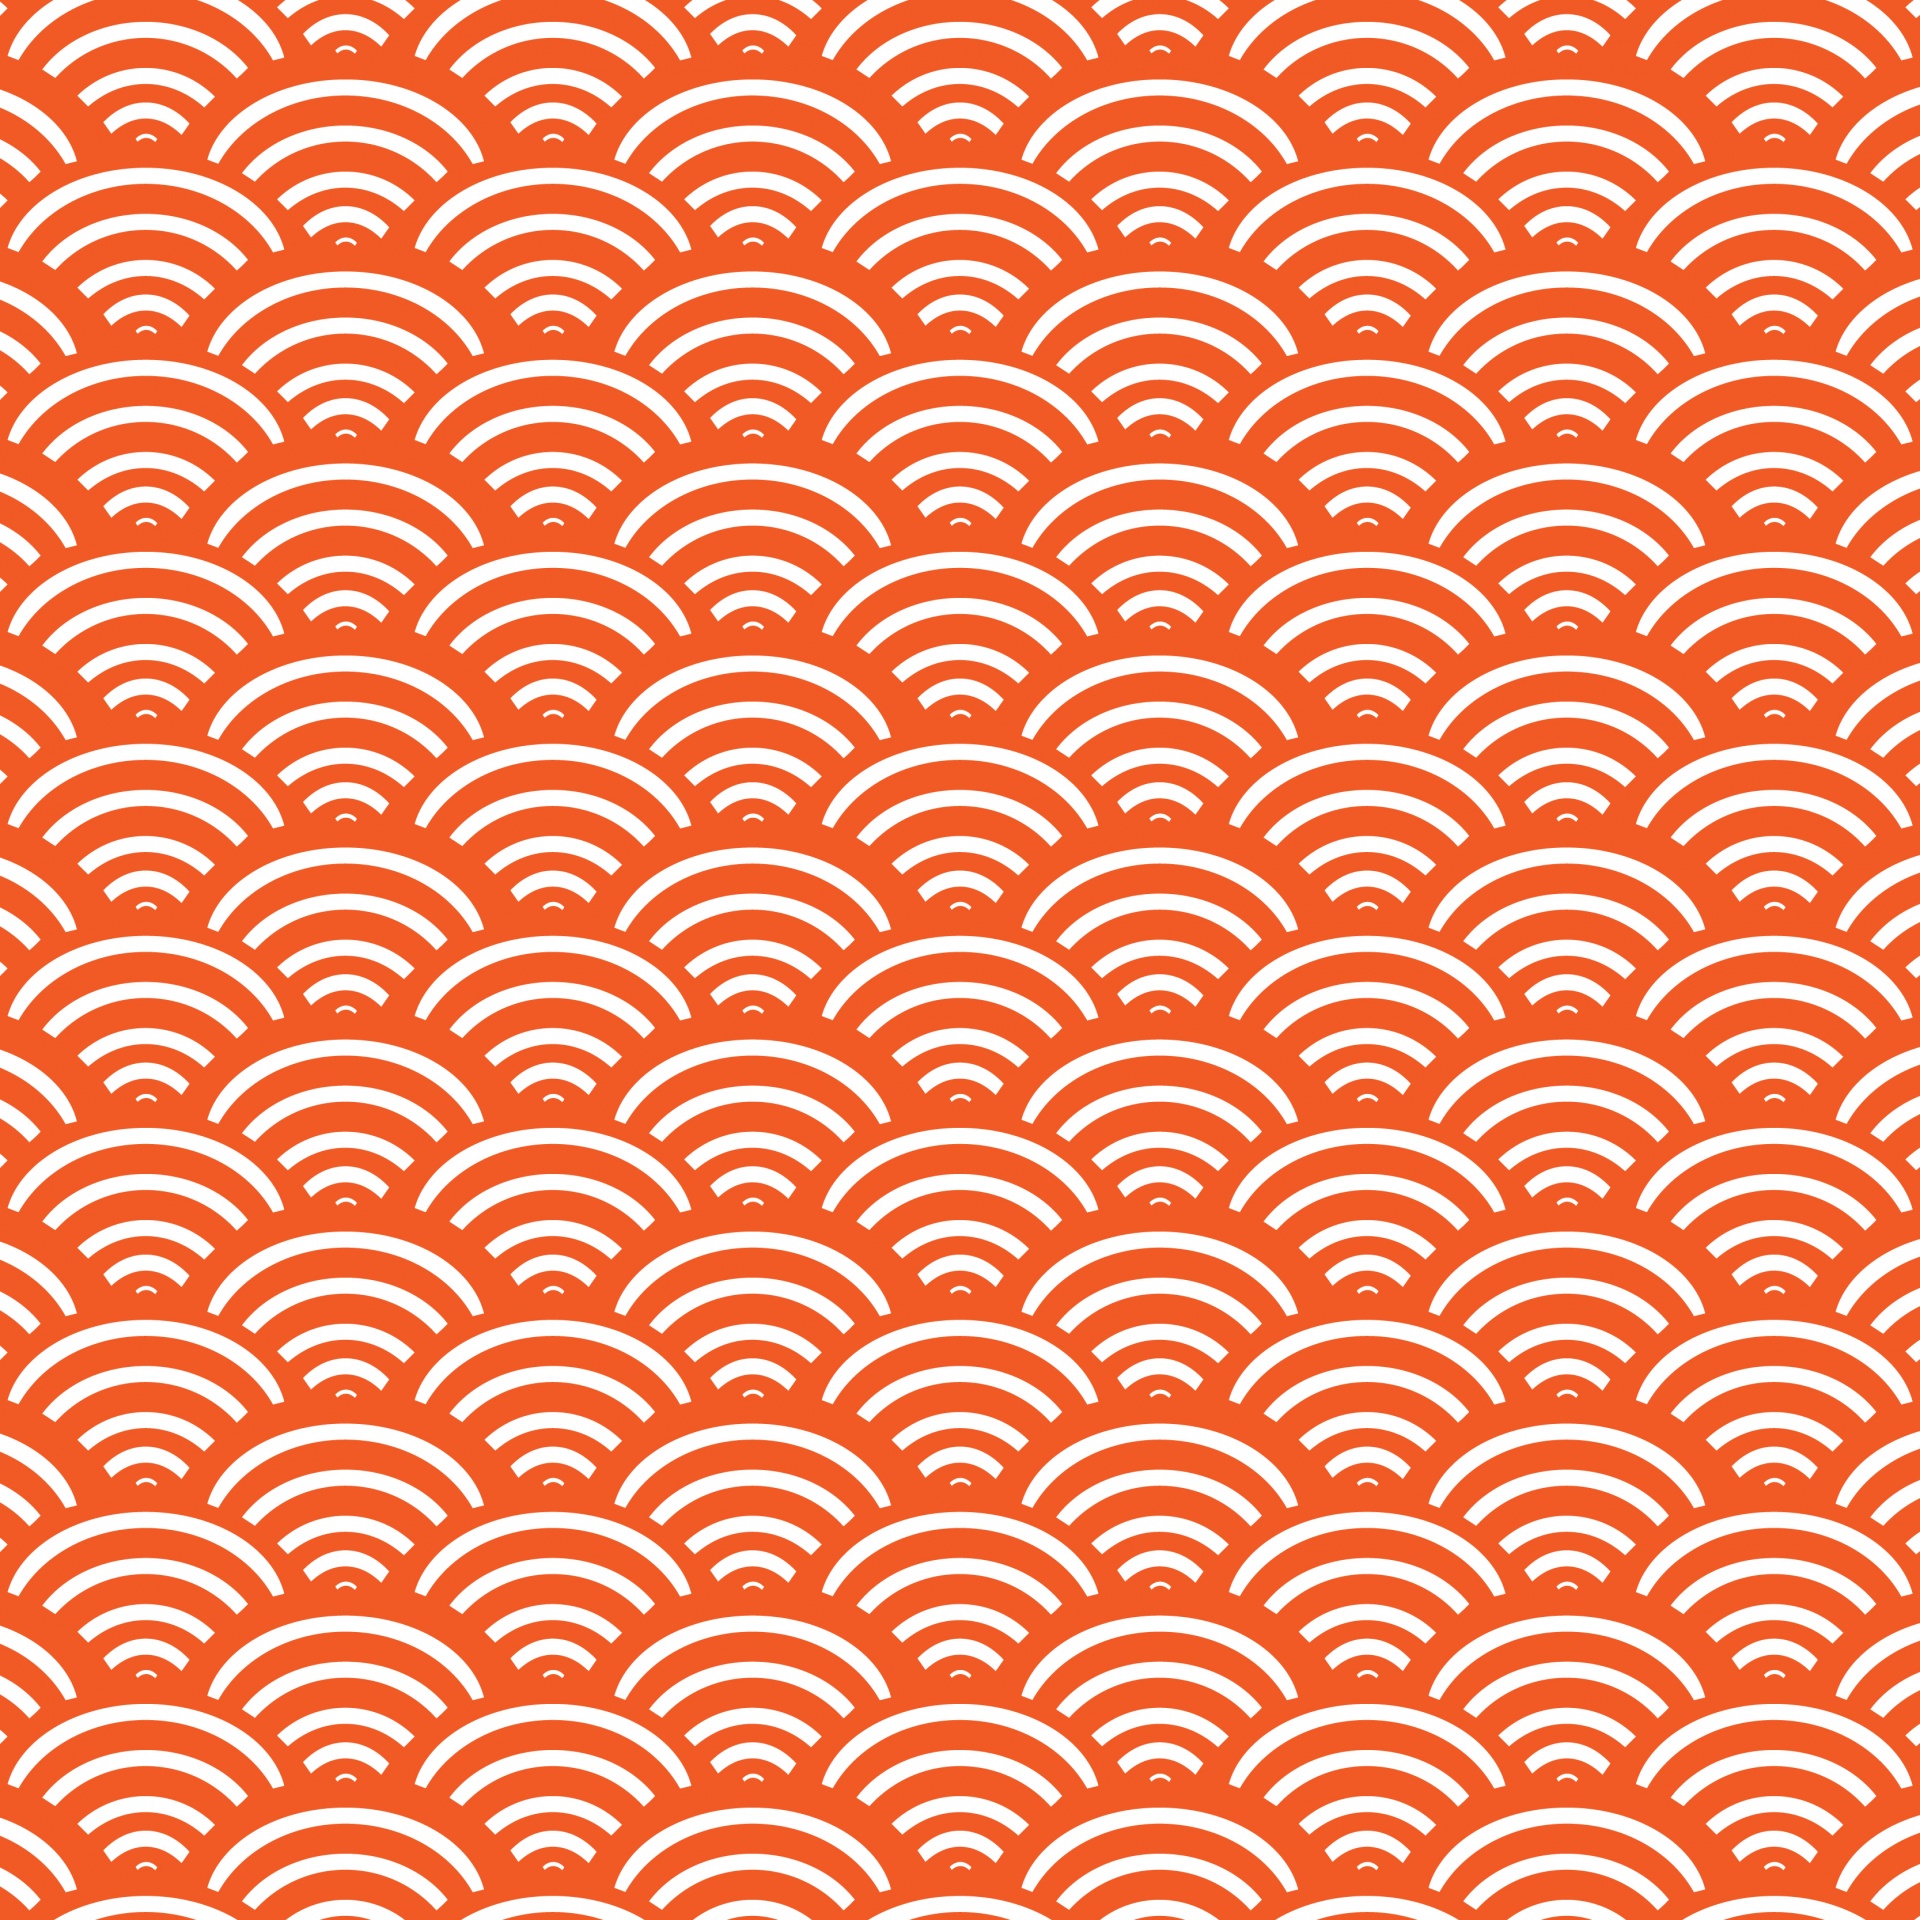 Scales, Scallops Background Orange